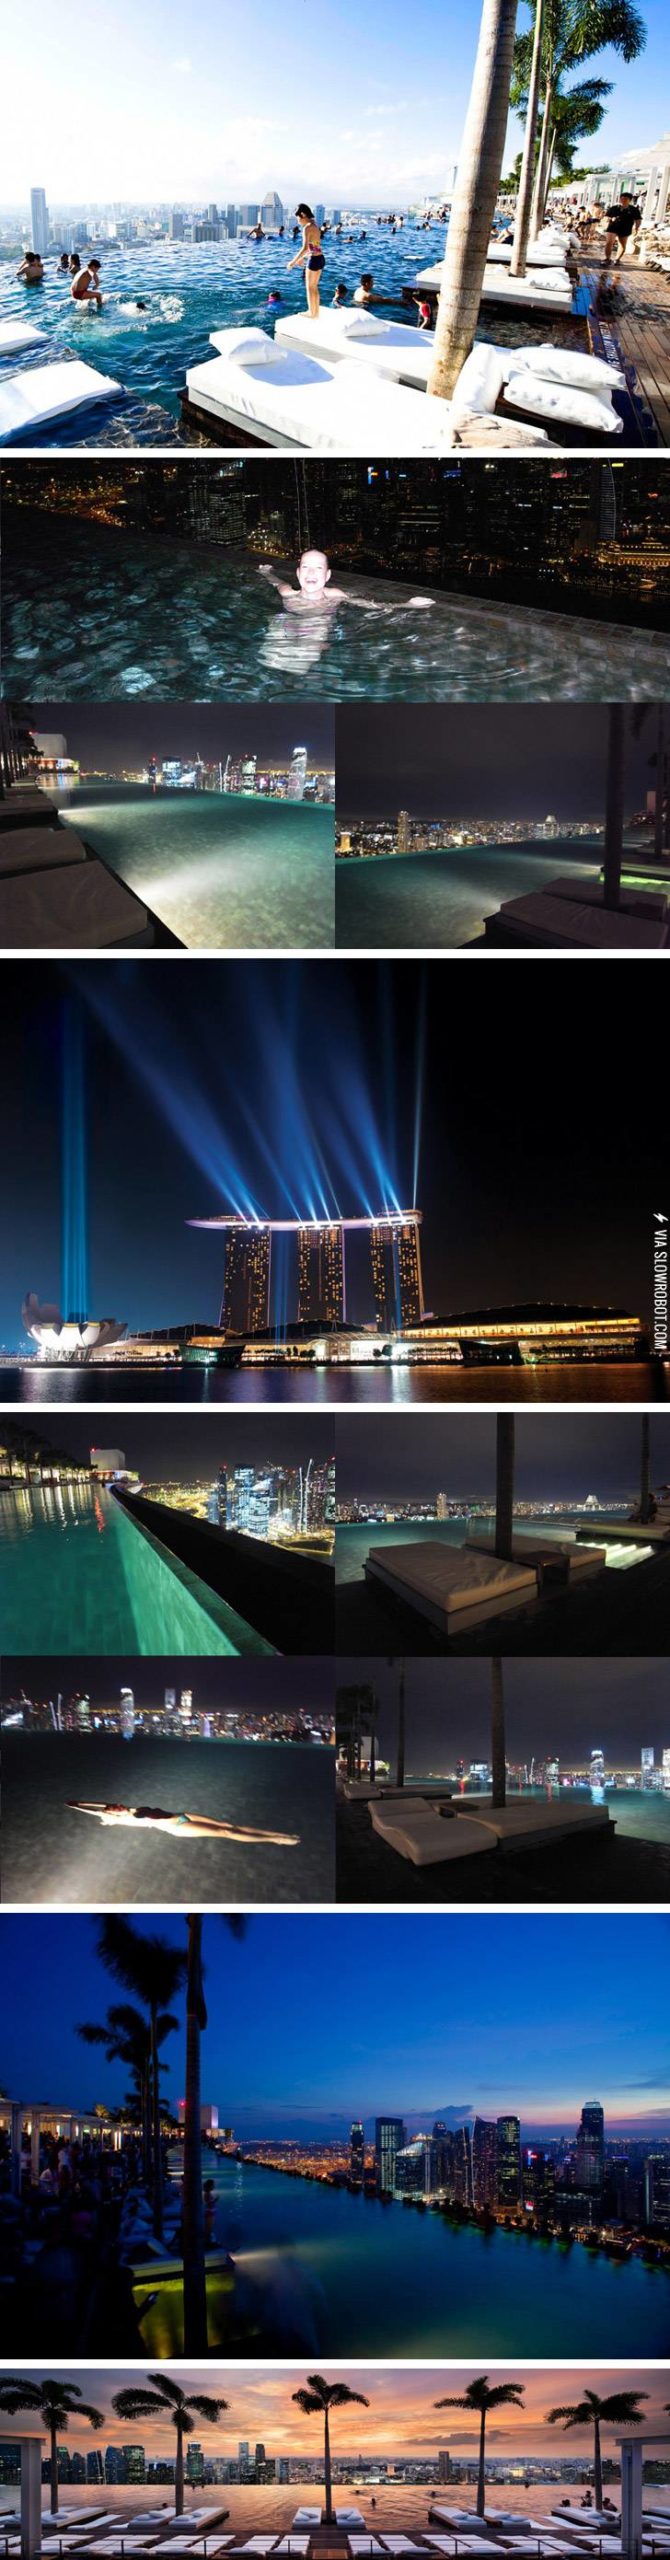 Marina+Bay+Sands+hotel%2C+Singapore.